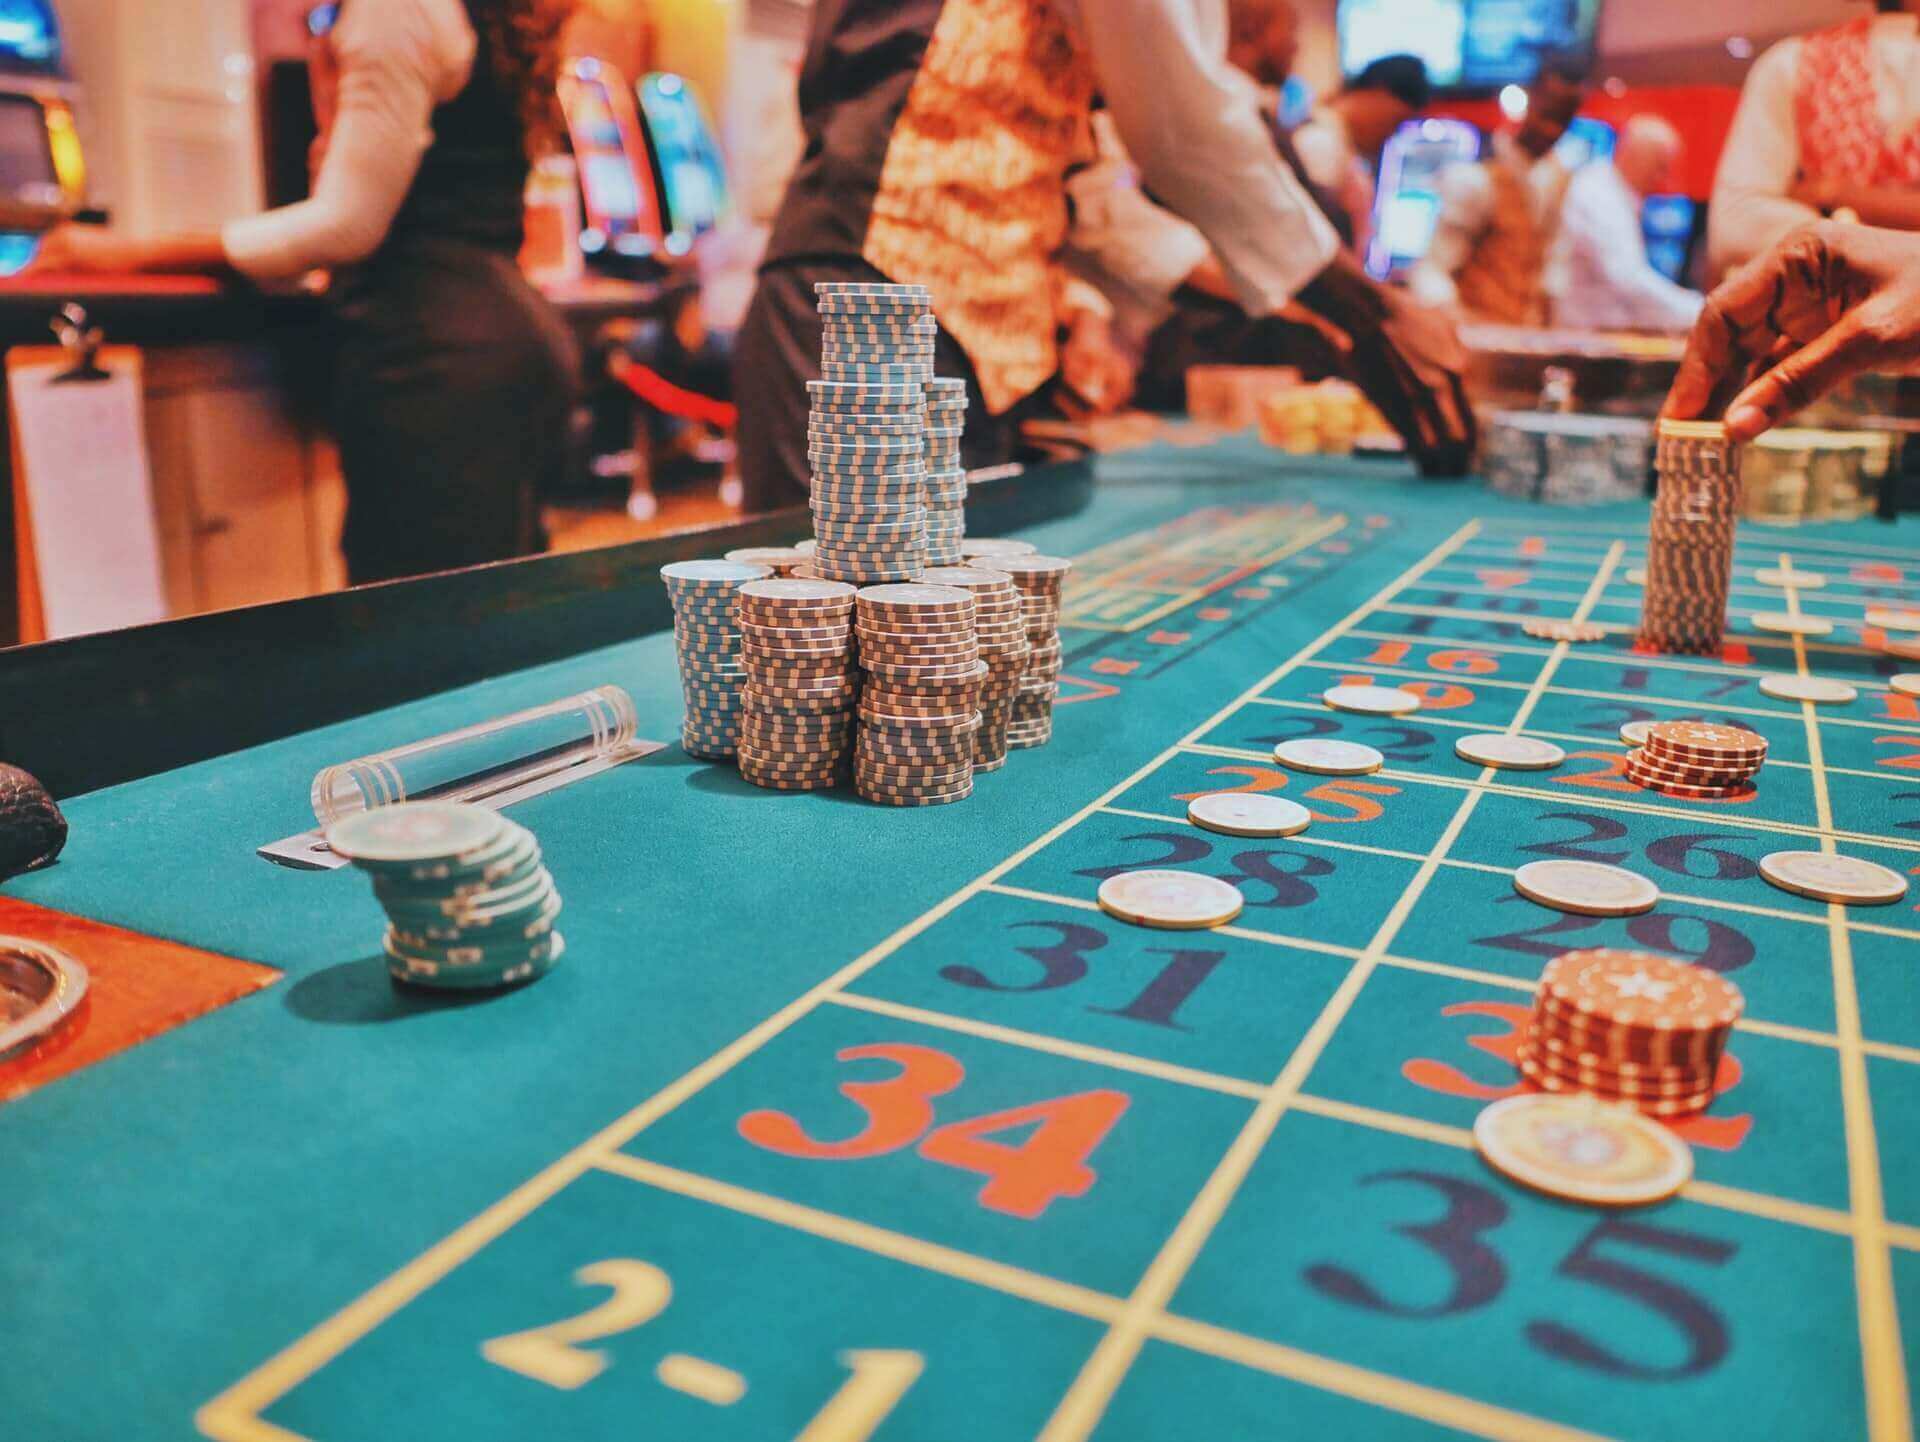 Best Online Casinos in 2022: Reviewing the Top Real Money Online Casinos